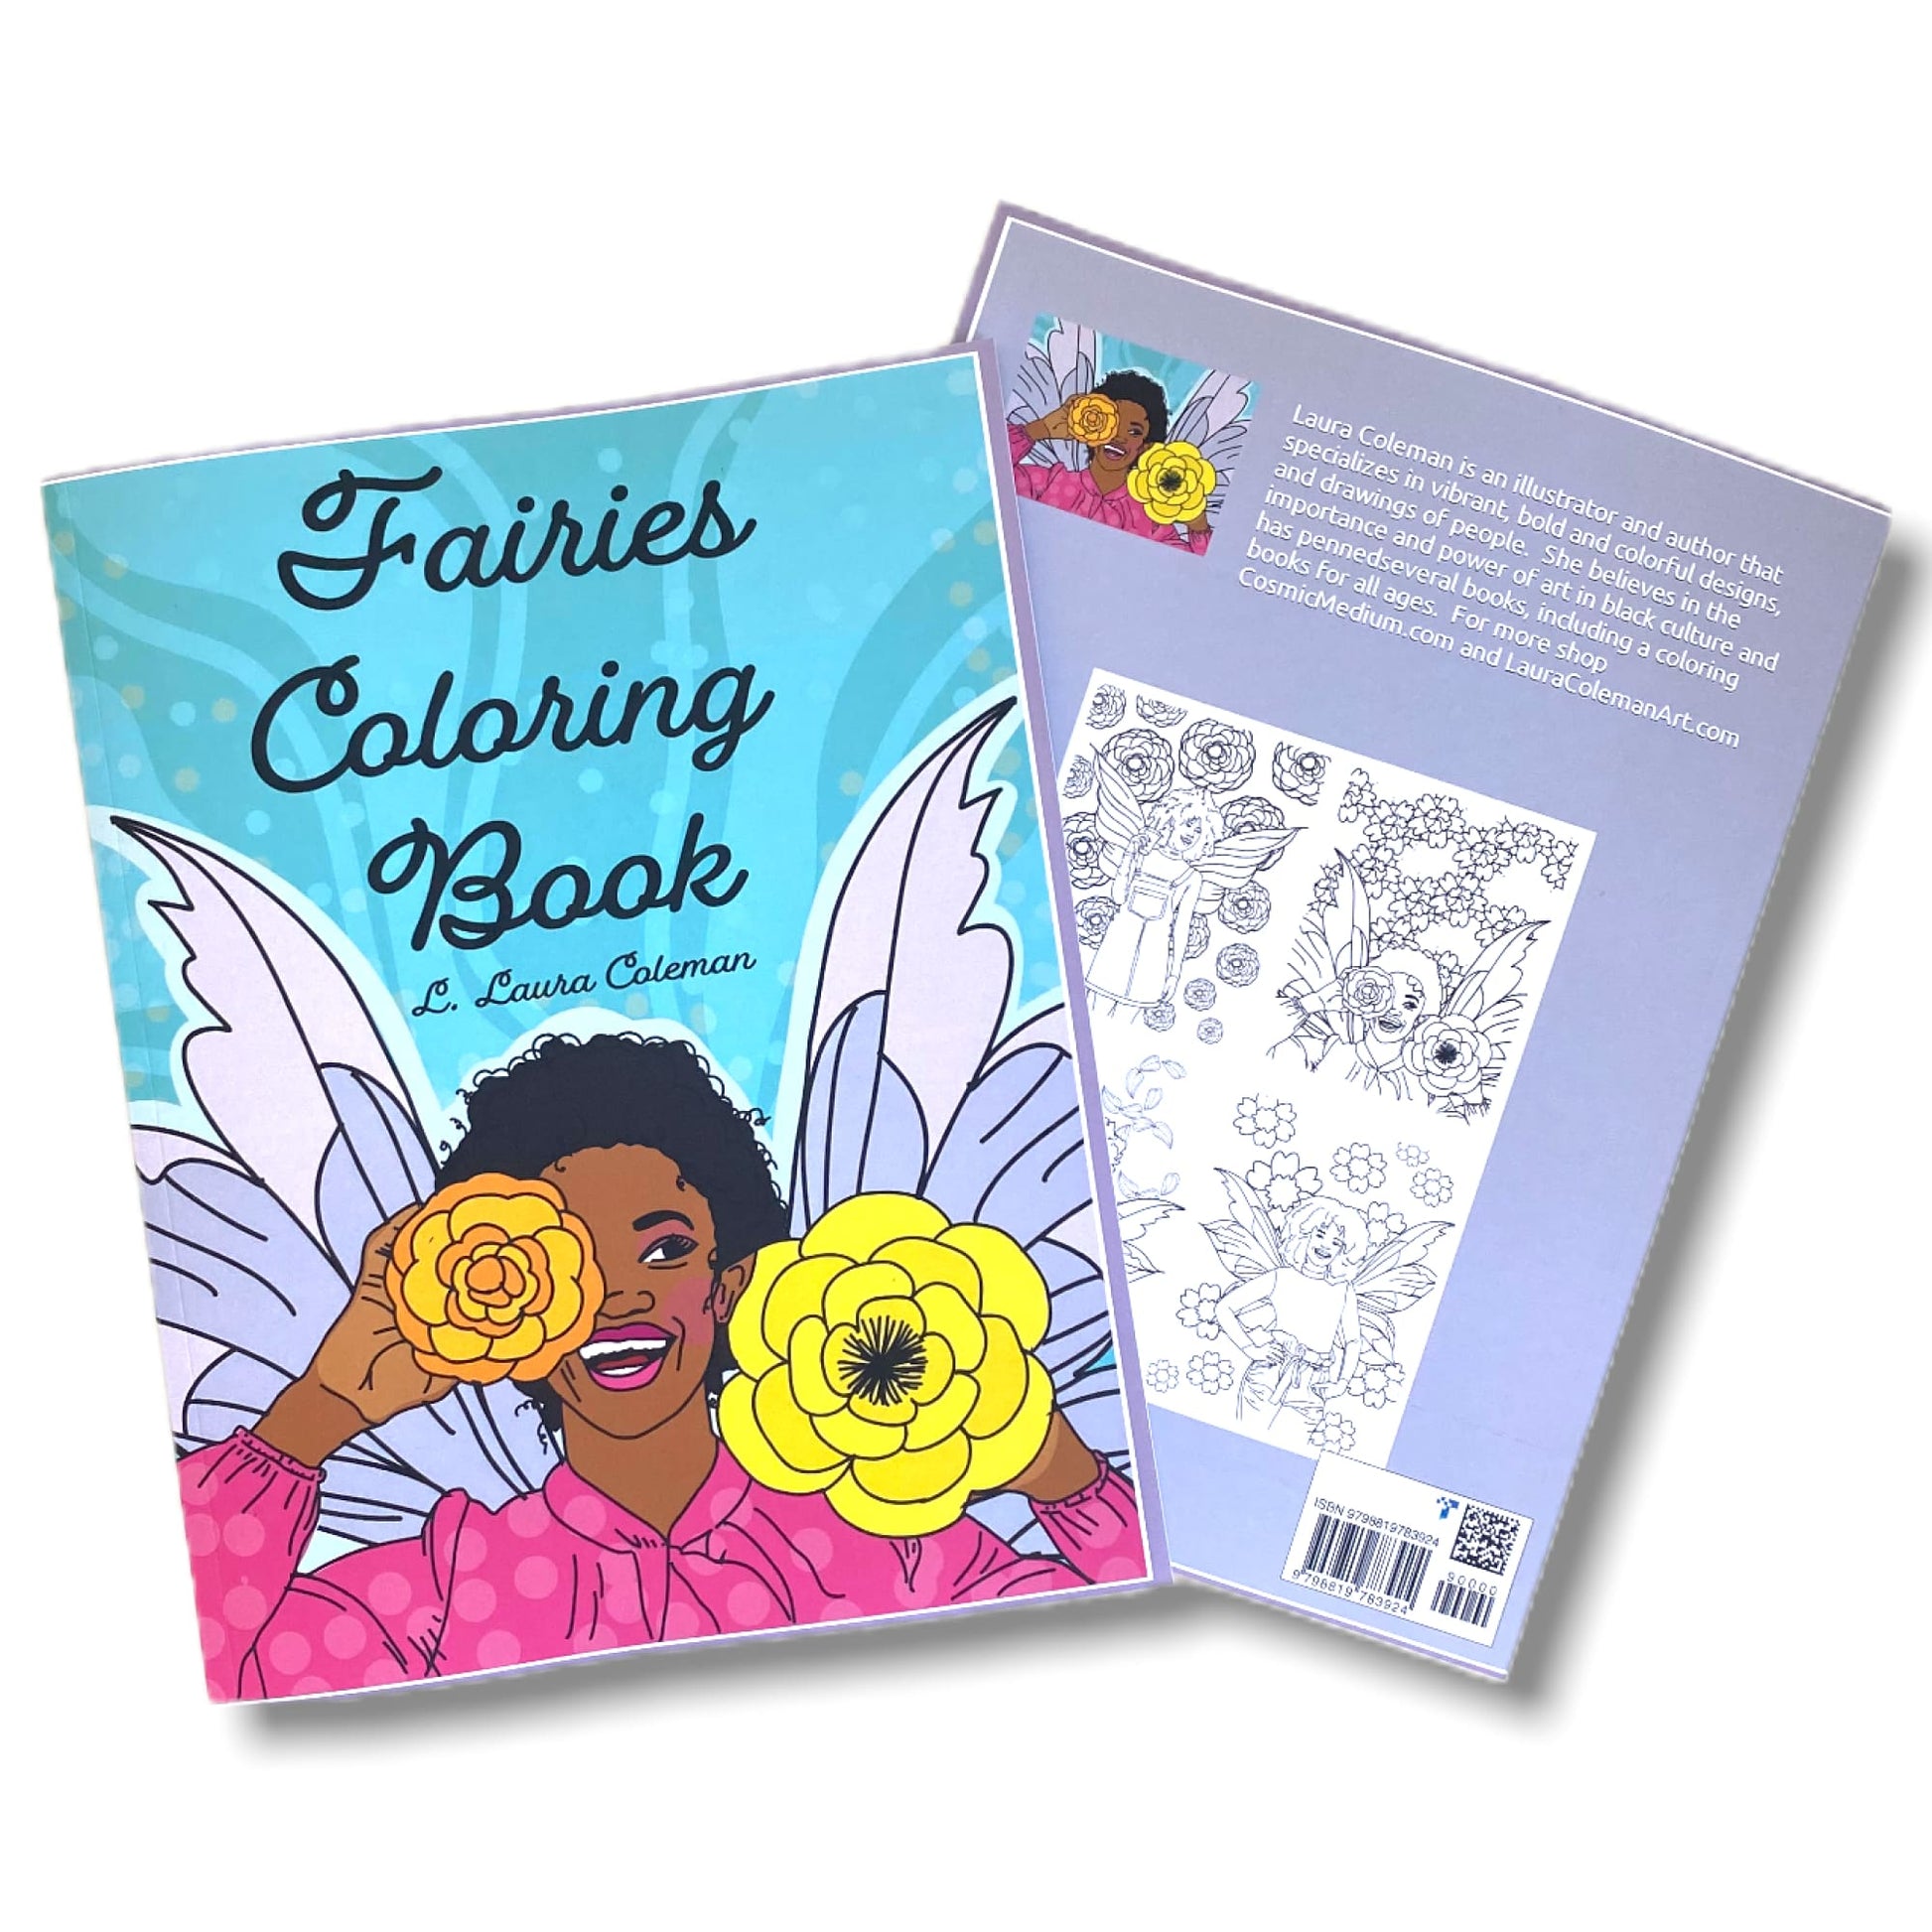 Fairy coloring book - CosmicMedium